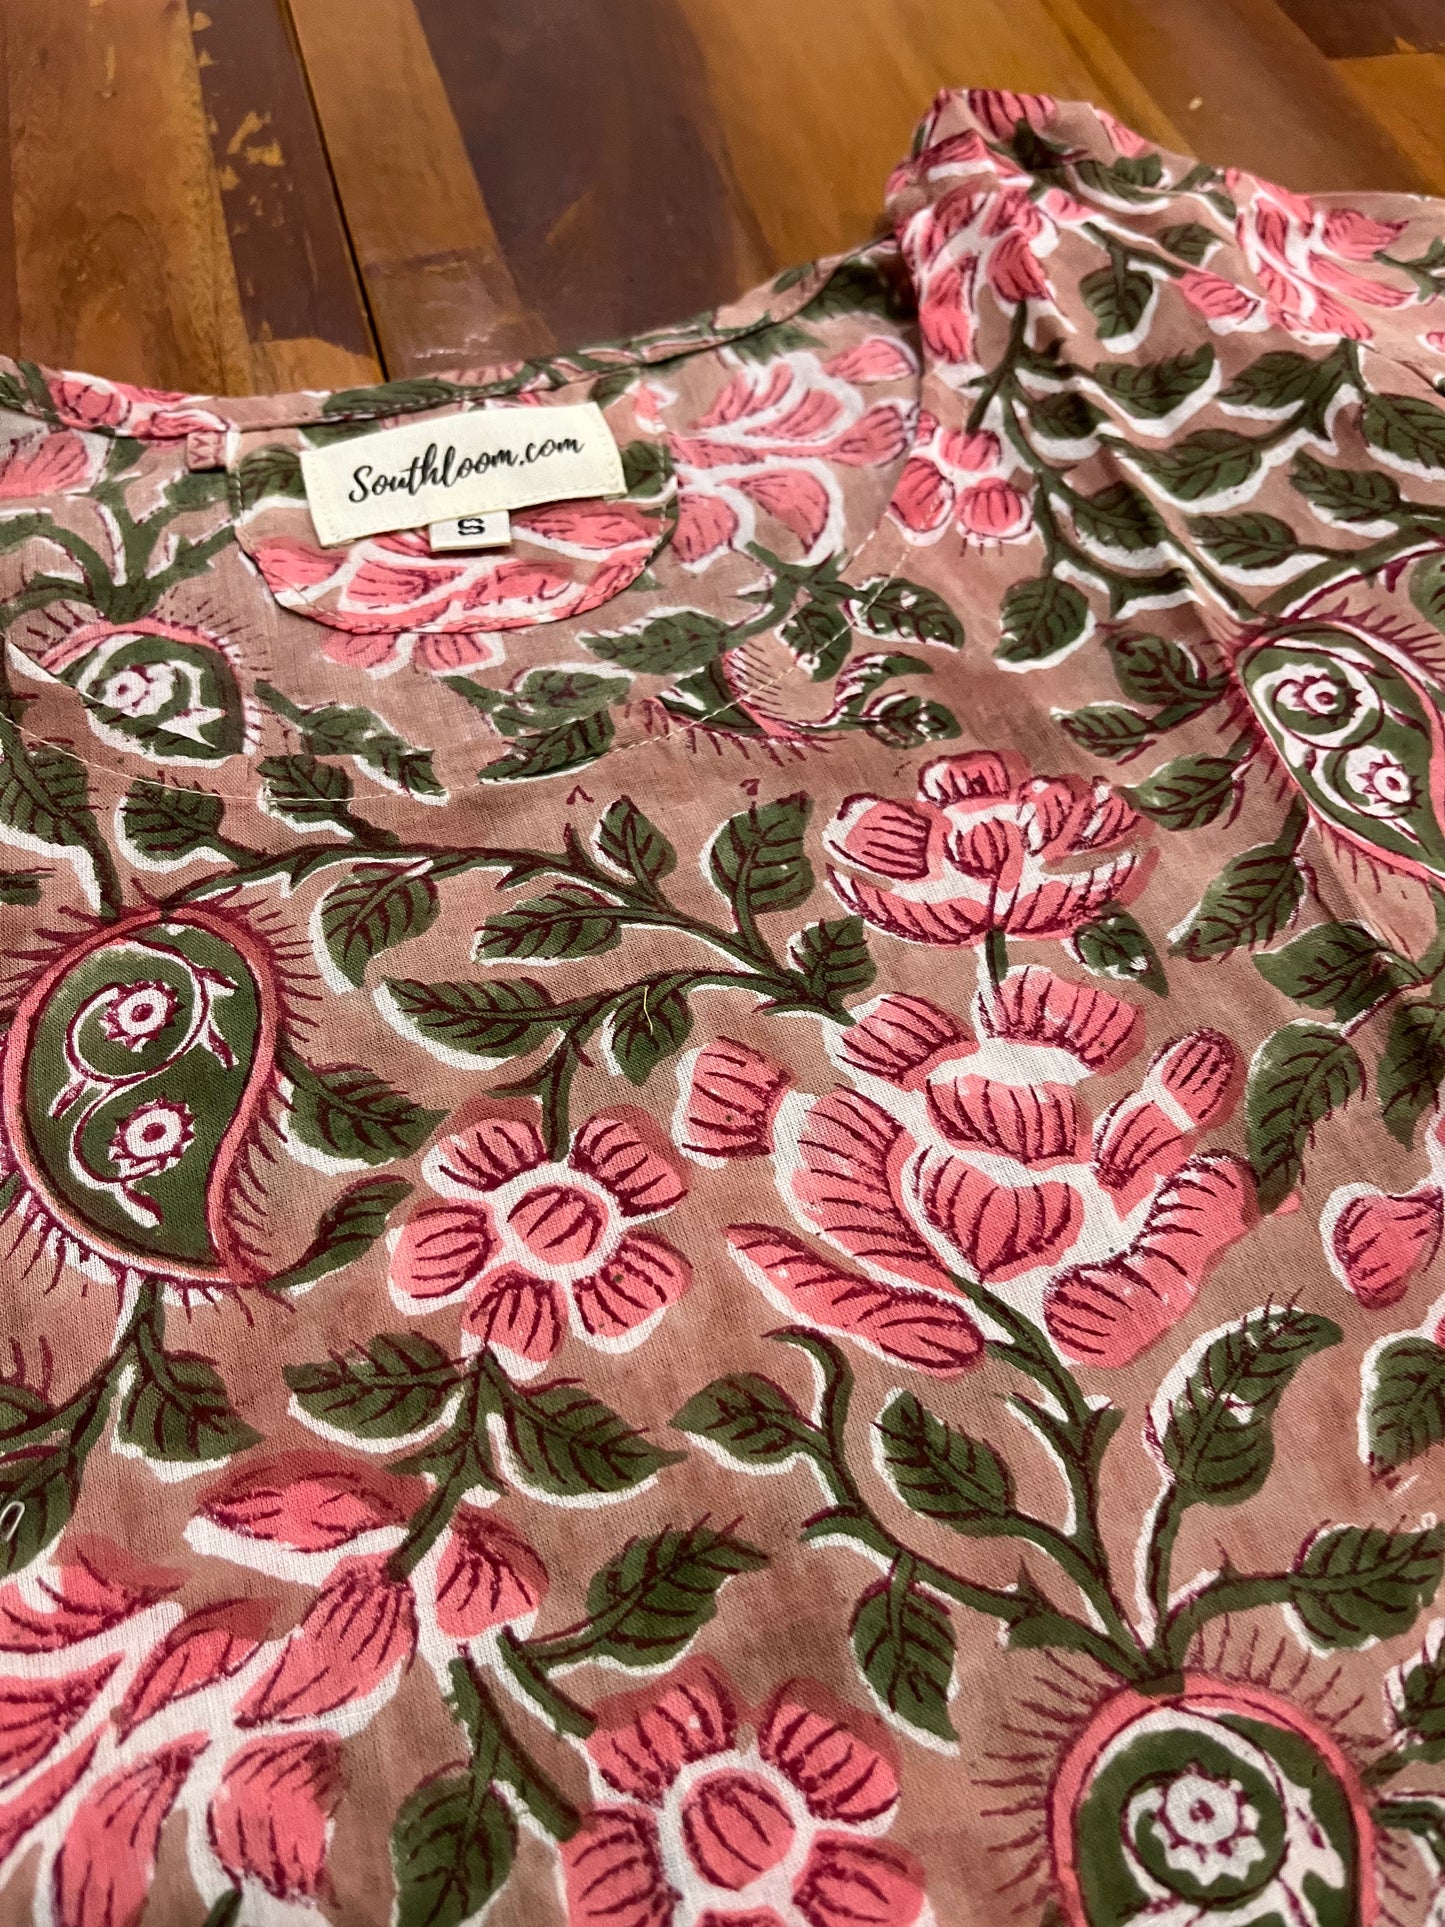 Southloom Jaipur Cotton Pink and Green Floral Hand Block Printed Brown Top (Half Sleeves)